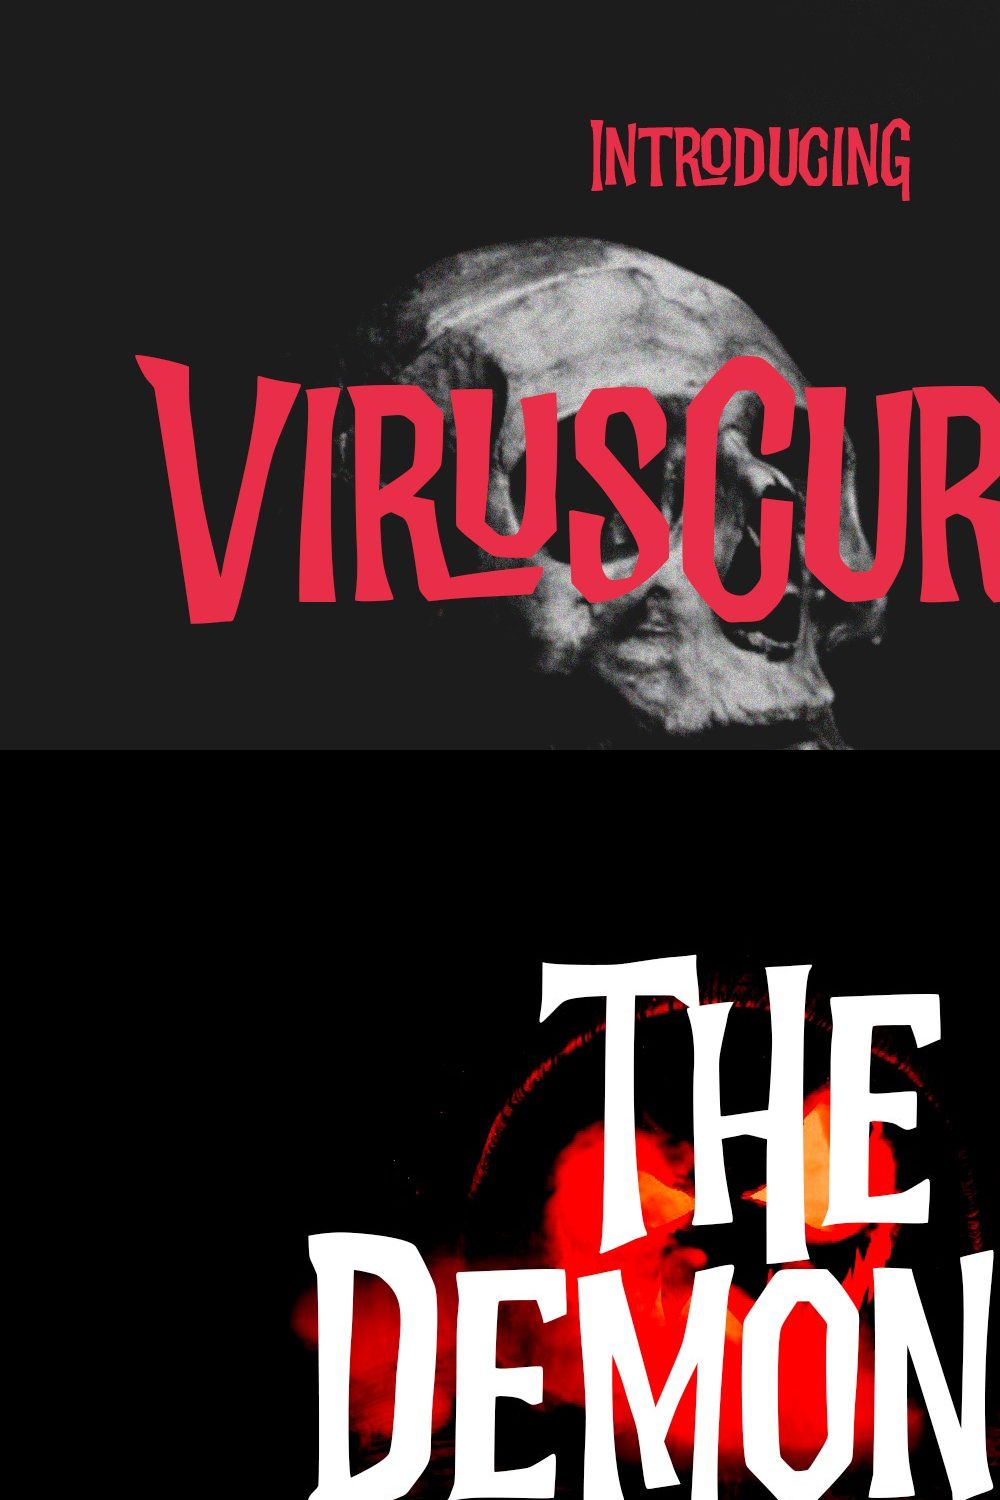 Virus Cursed Halloween Sans Vintage pinterest preview image.